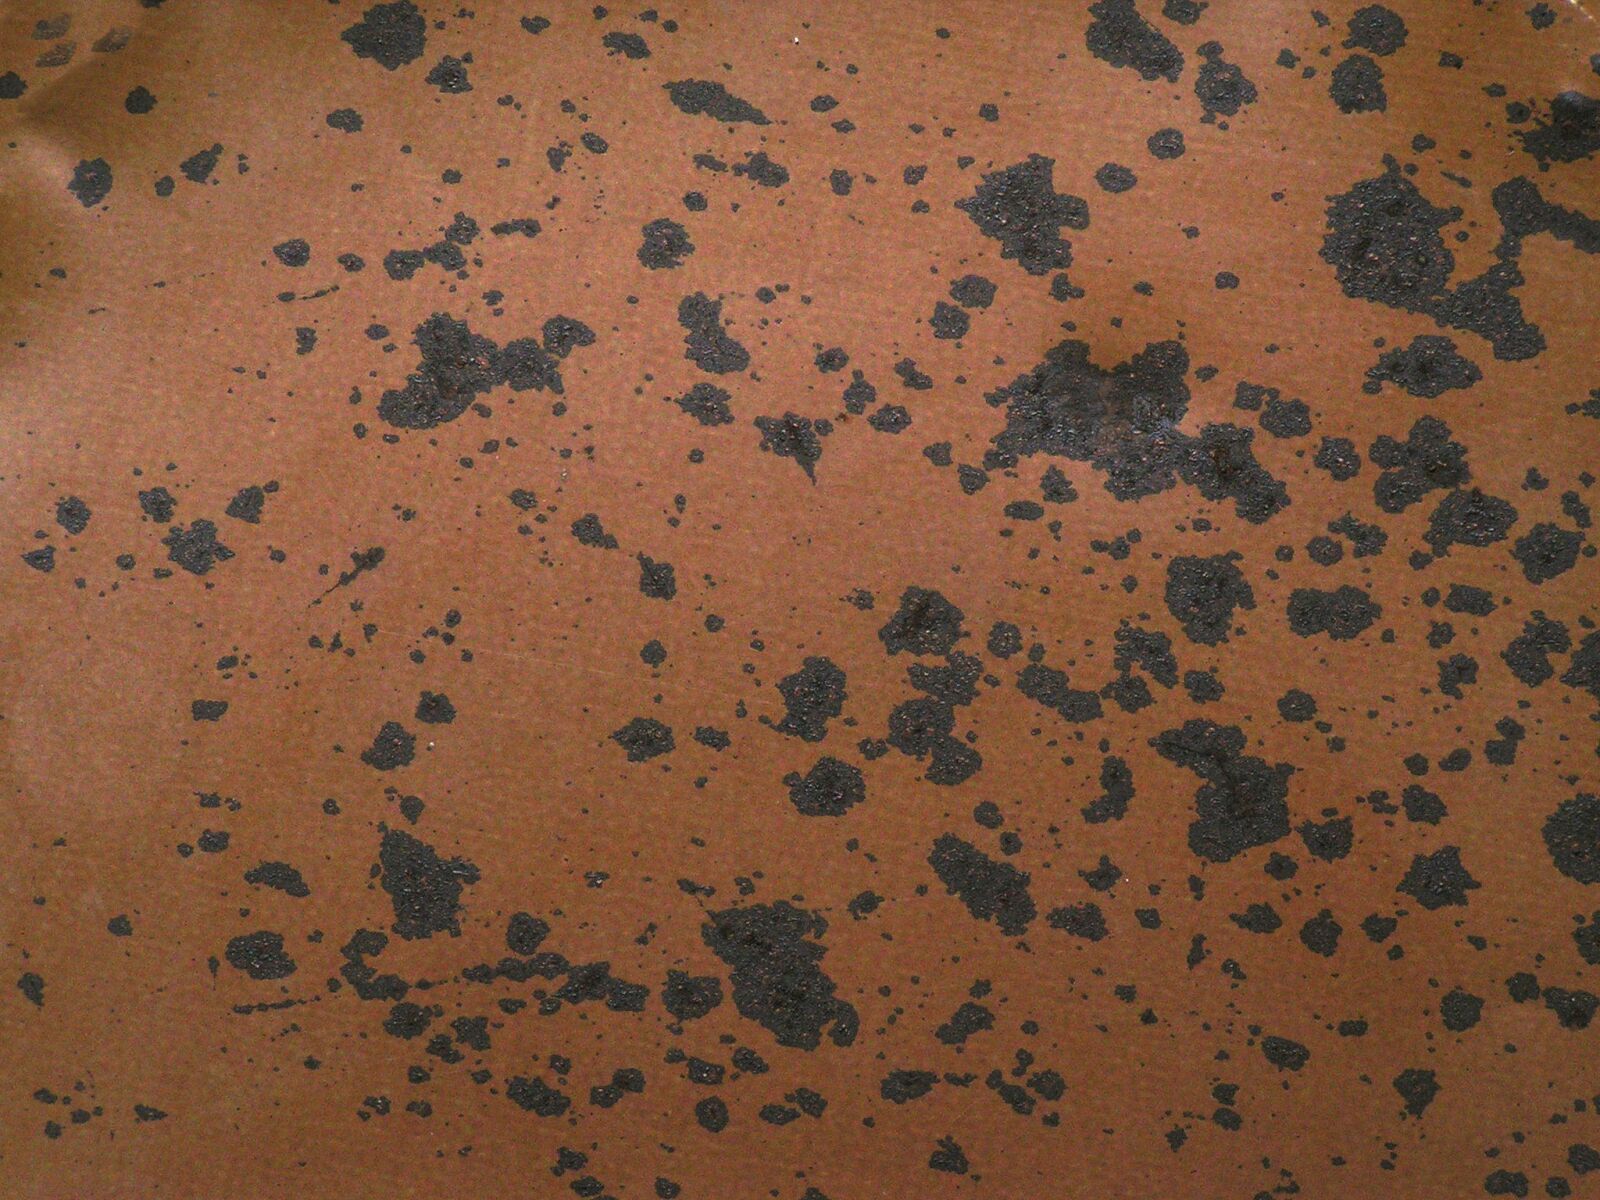 KONICA MINOLTA DiMAGE Z1 sample photo. Rust, metal, texture photography